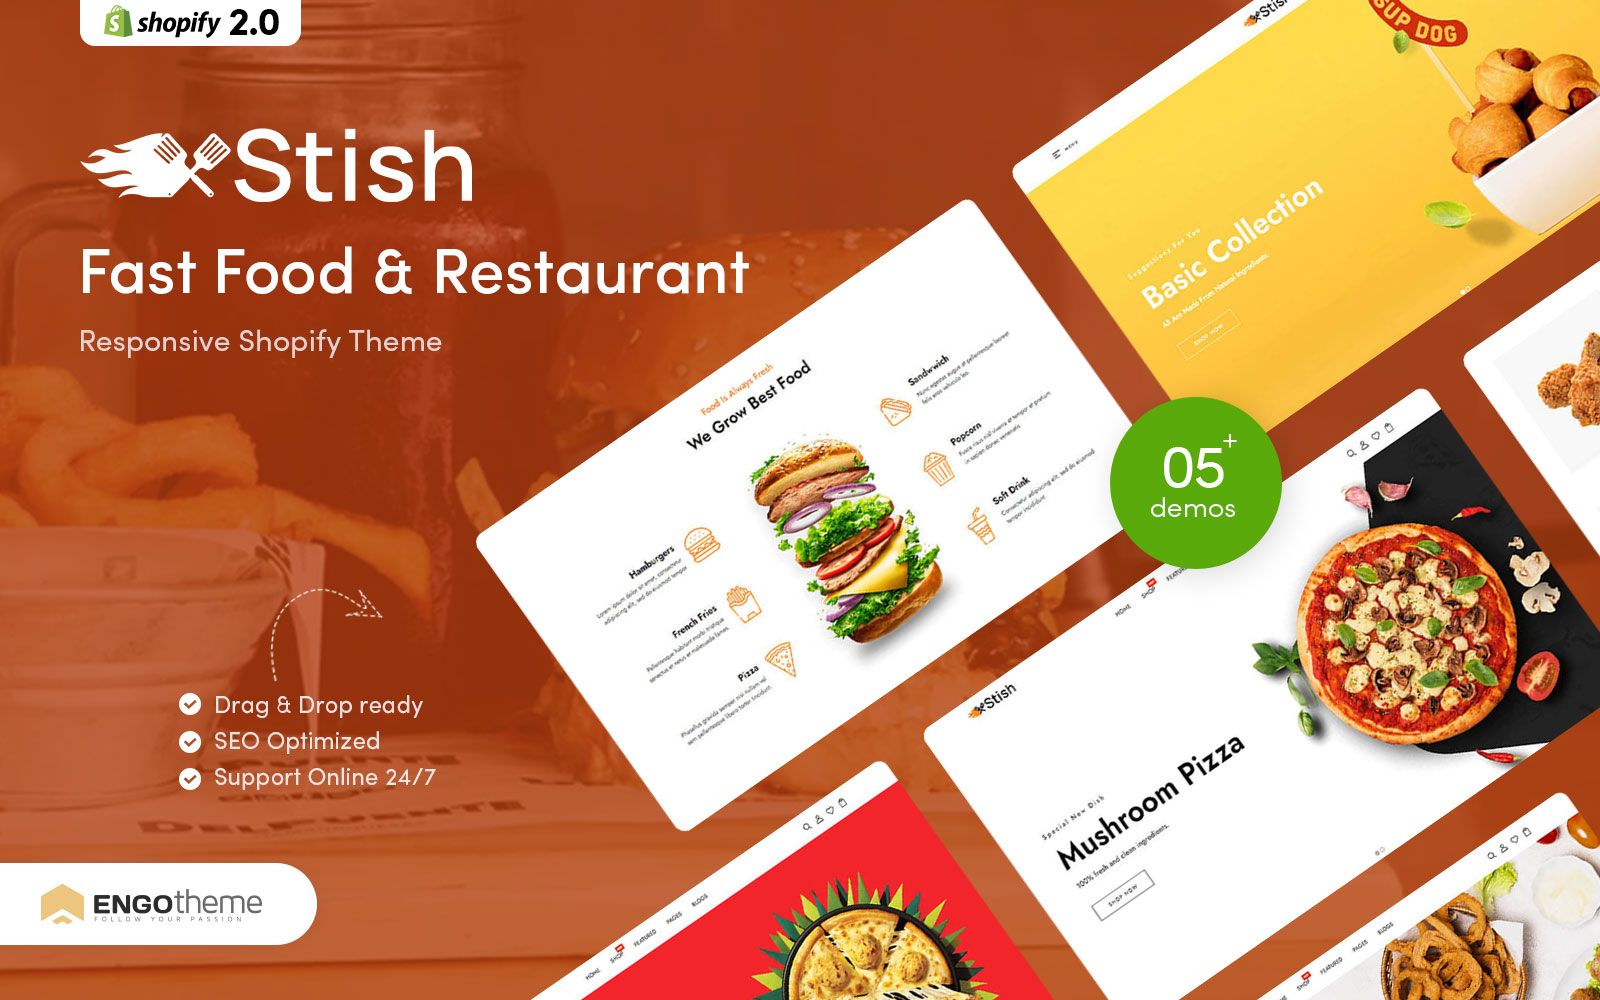 Stish - Fast Food & Restaurant Responsive Shopify Theme